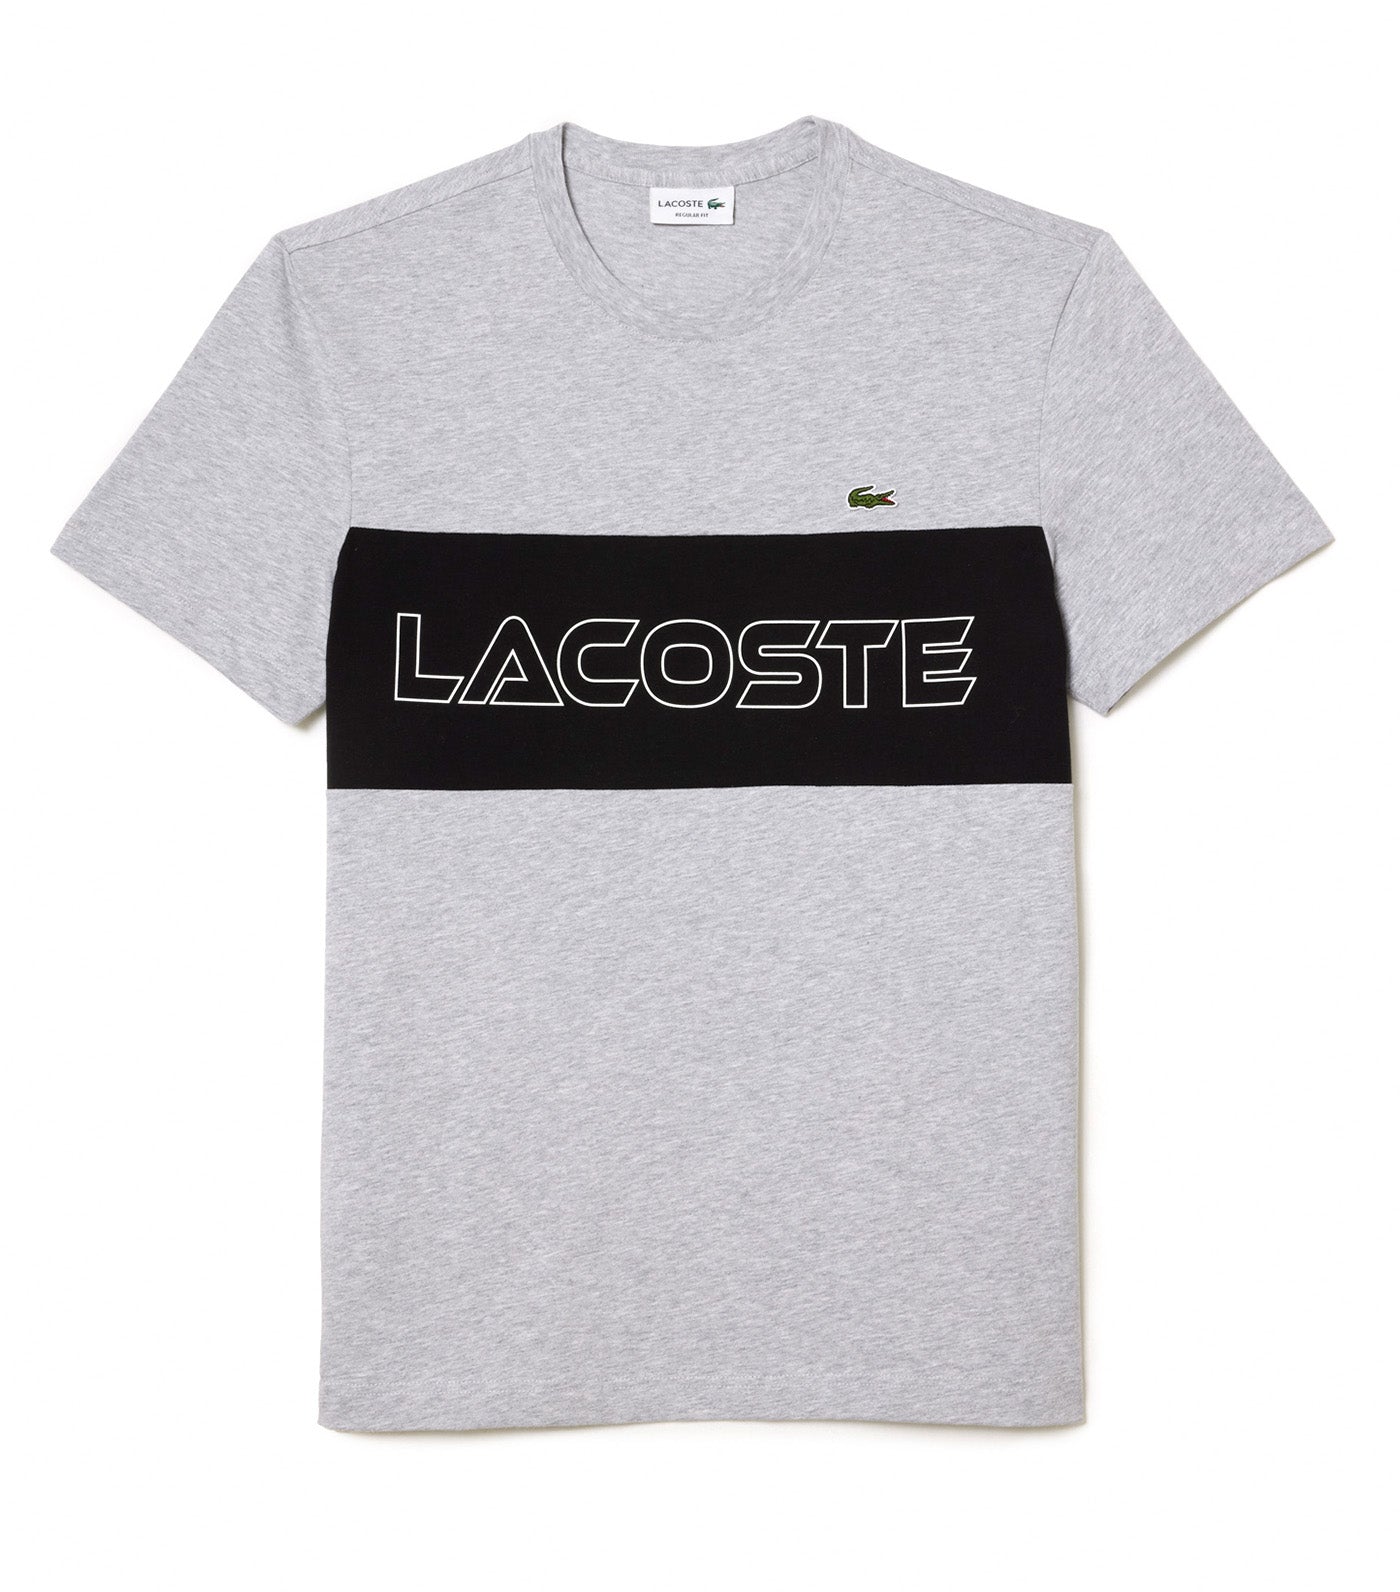 Lacoste Lacoste Sequoia/Abysm Fit Printed Colourblock Regular T-Shirt